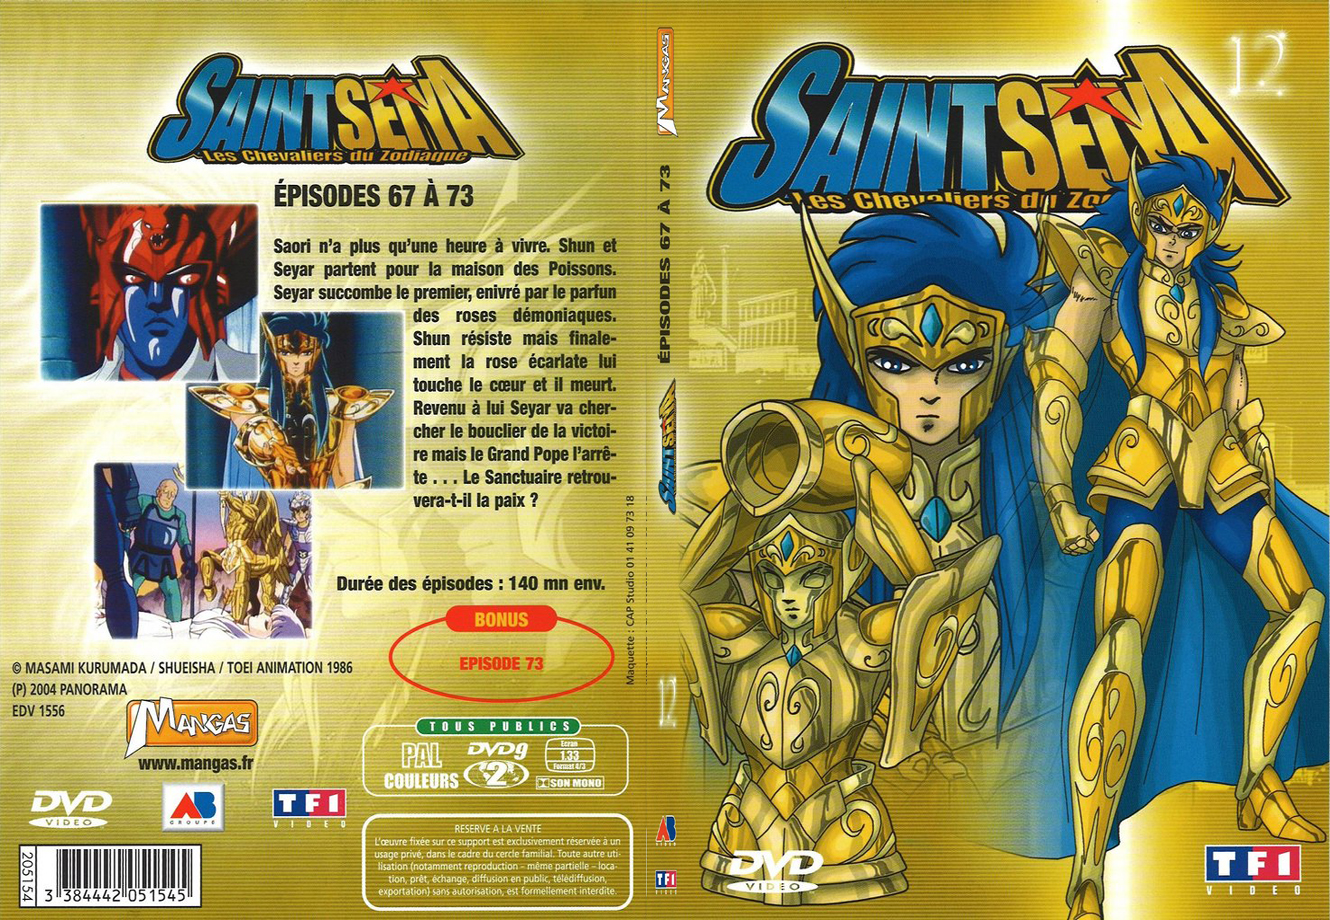 Jaquette DVD Saint Seiya vol 12 - SLIM